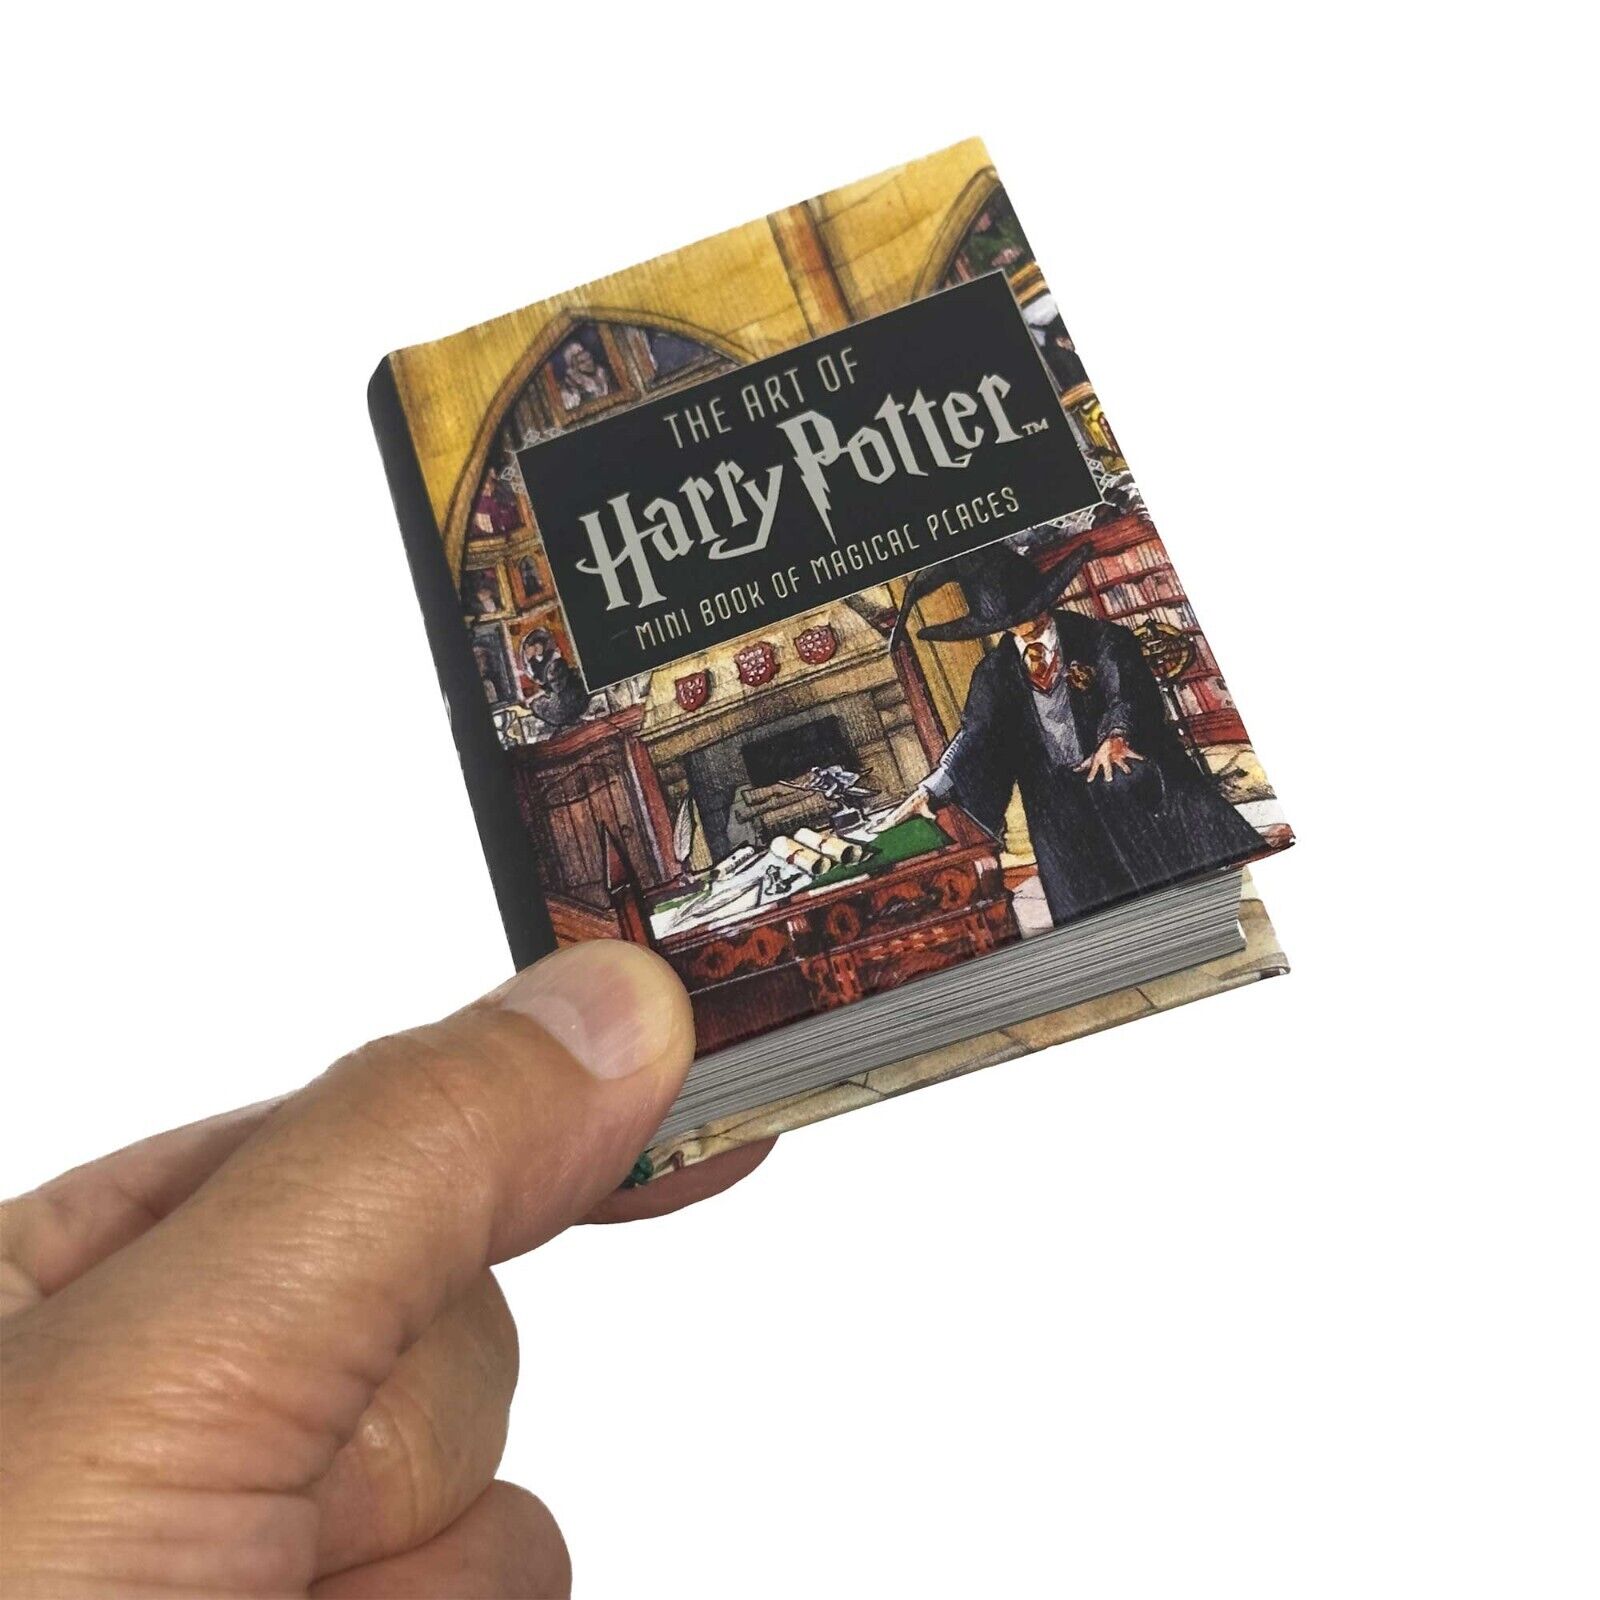 Inpakken Bedrog Ontvanger gift Mini Book the Art of Harry Potter Magical Places hardcover 304 color  pages 9781683837510 | eBay